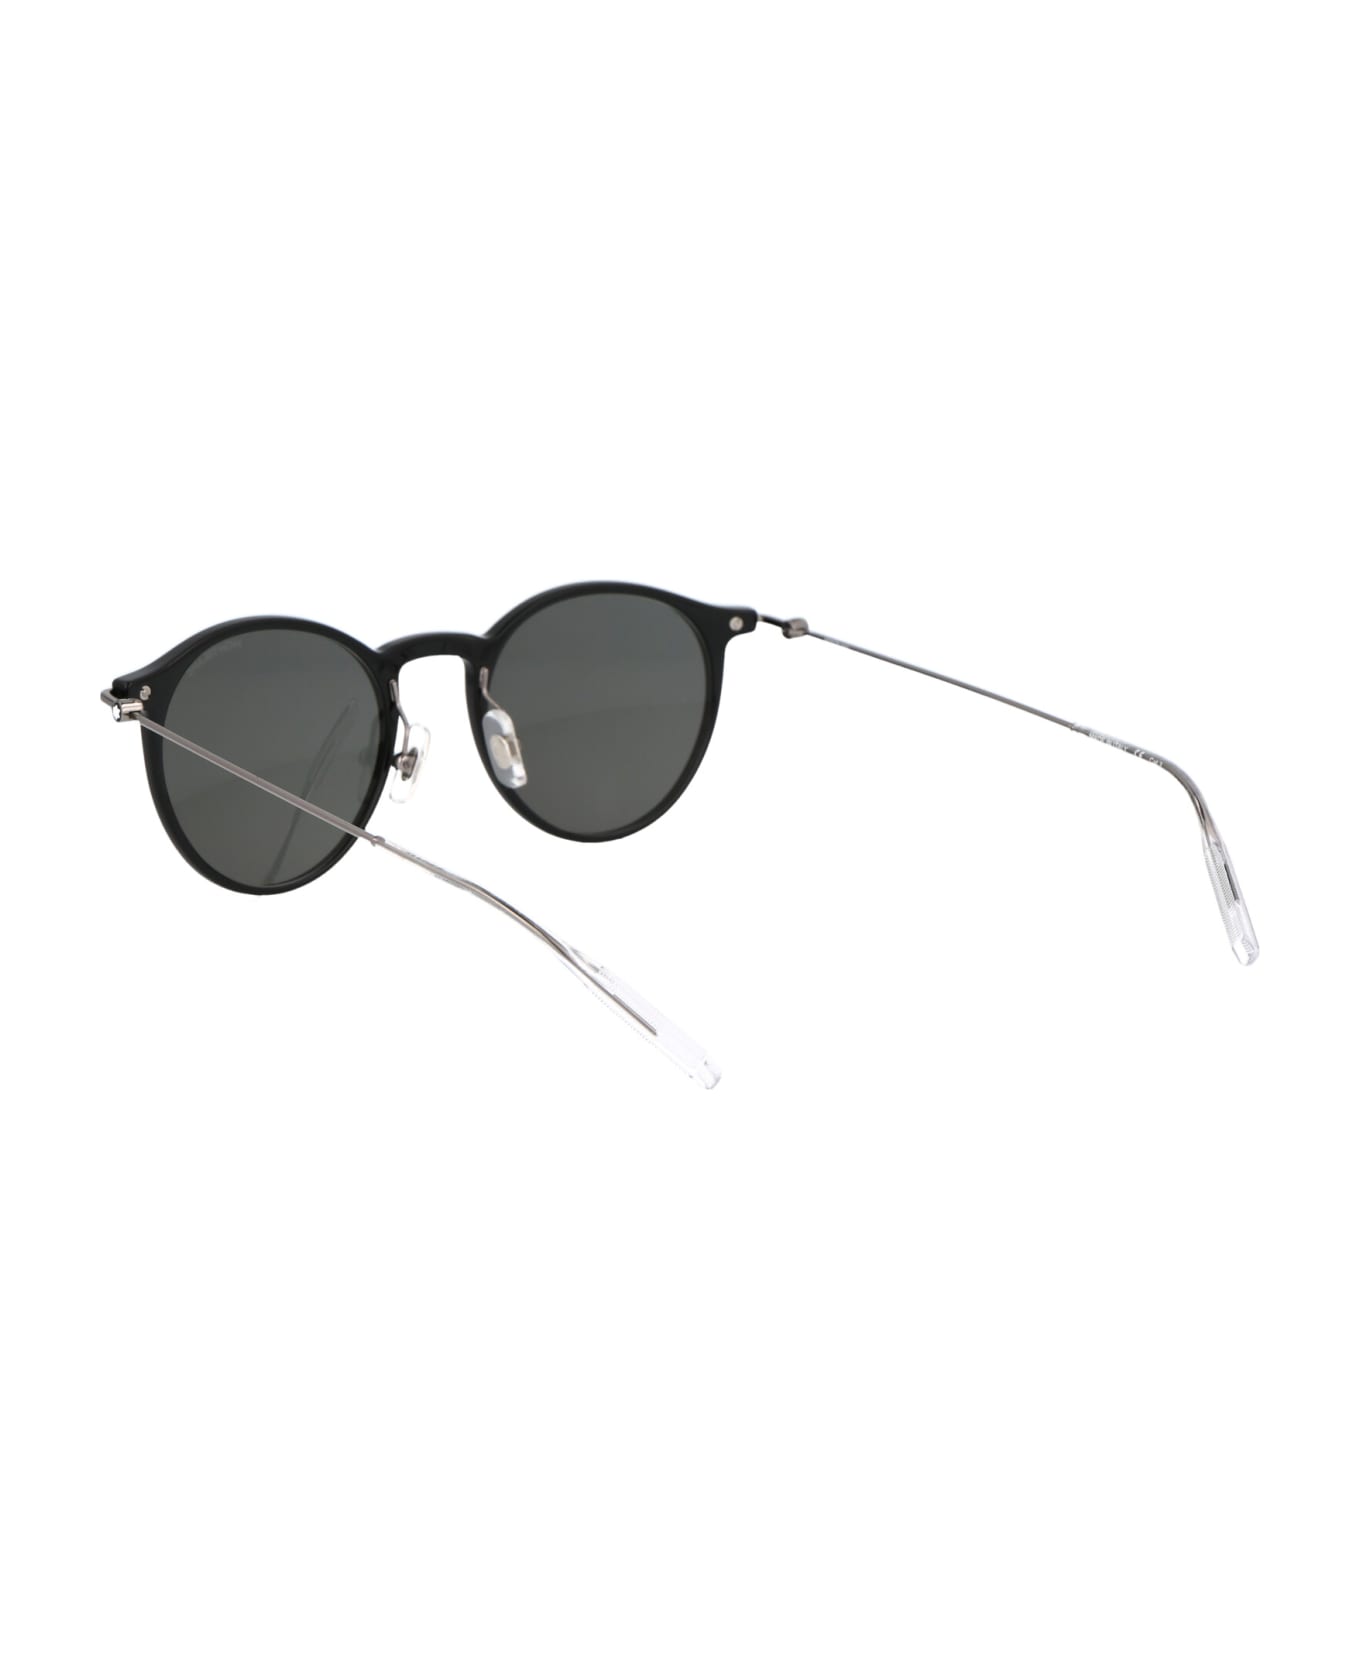 Montblanc Mb0097s Sunglasses - 005 BLACK RUTHENIUM GREY サングラス